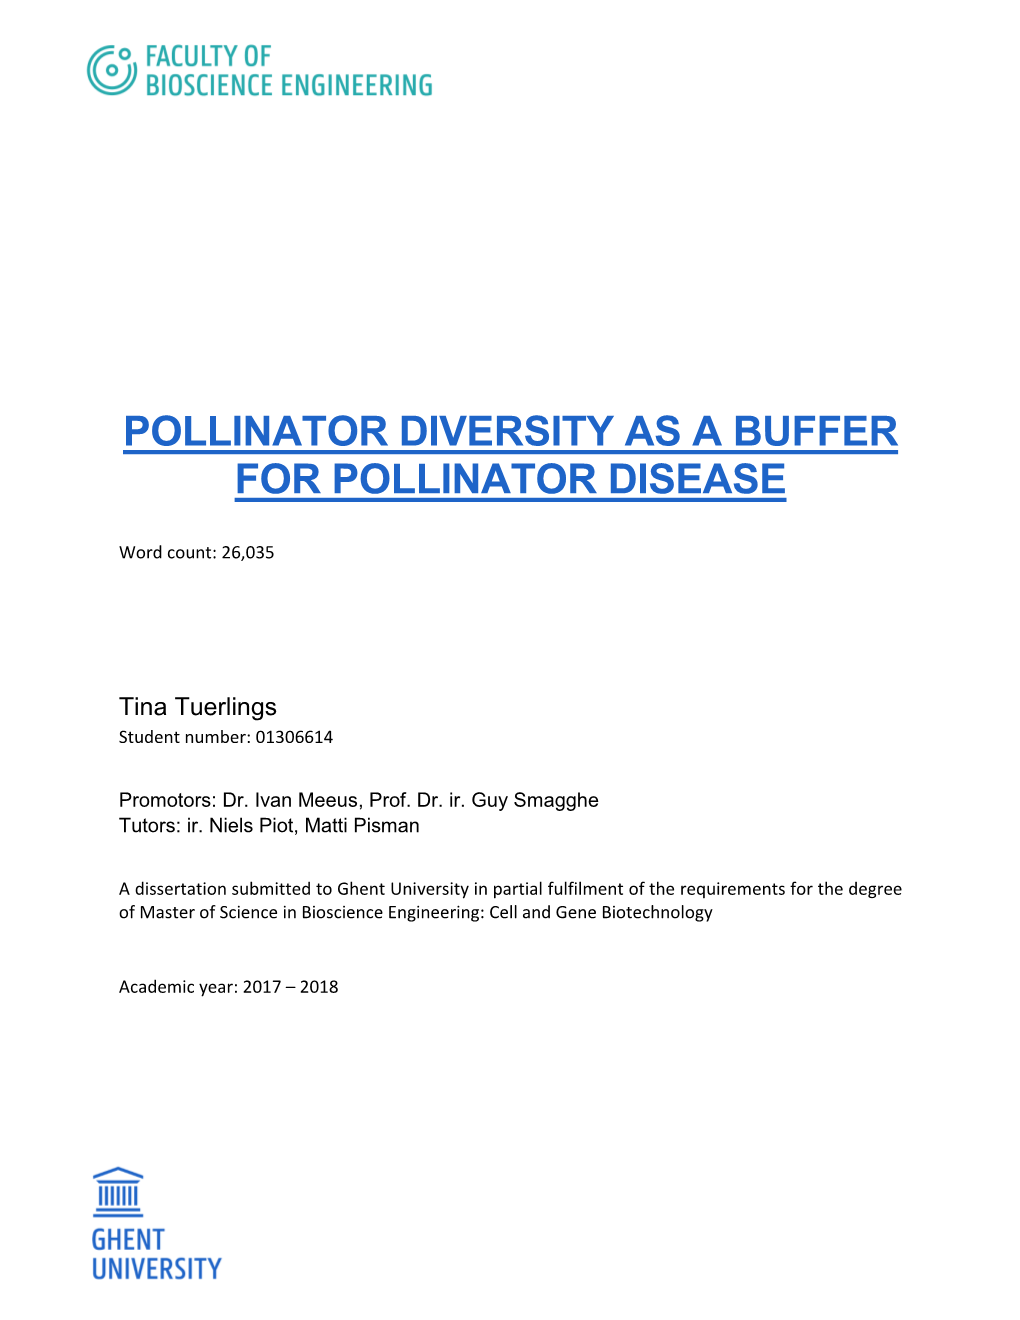 Pollinator Diversity As a Buffer for Pollinator Disease